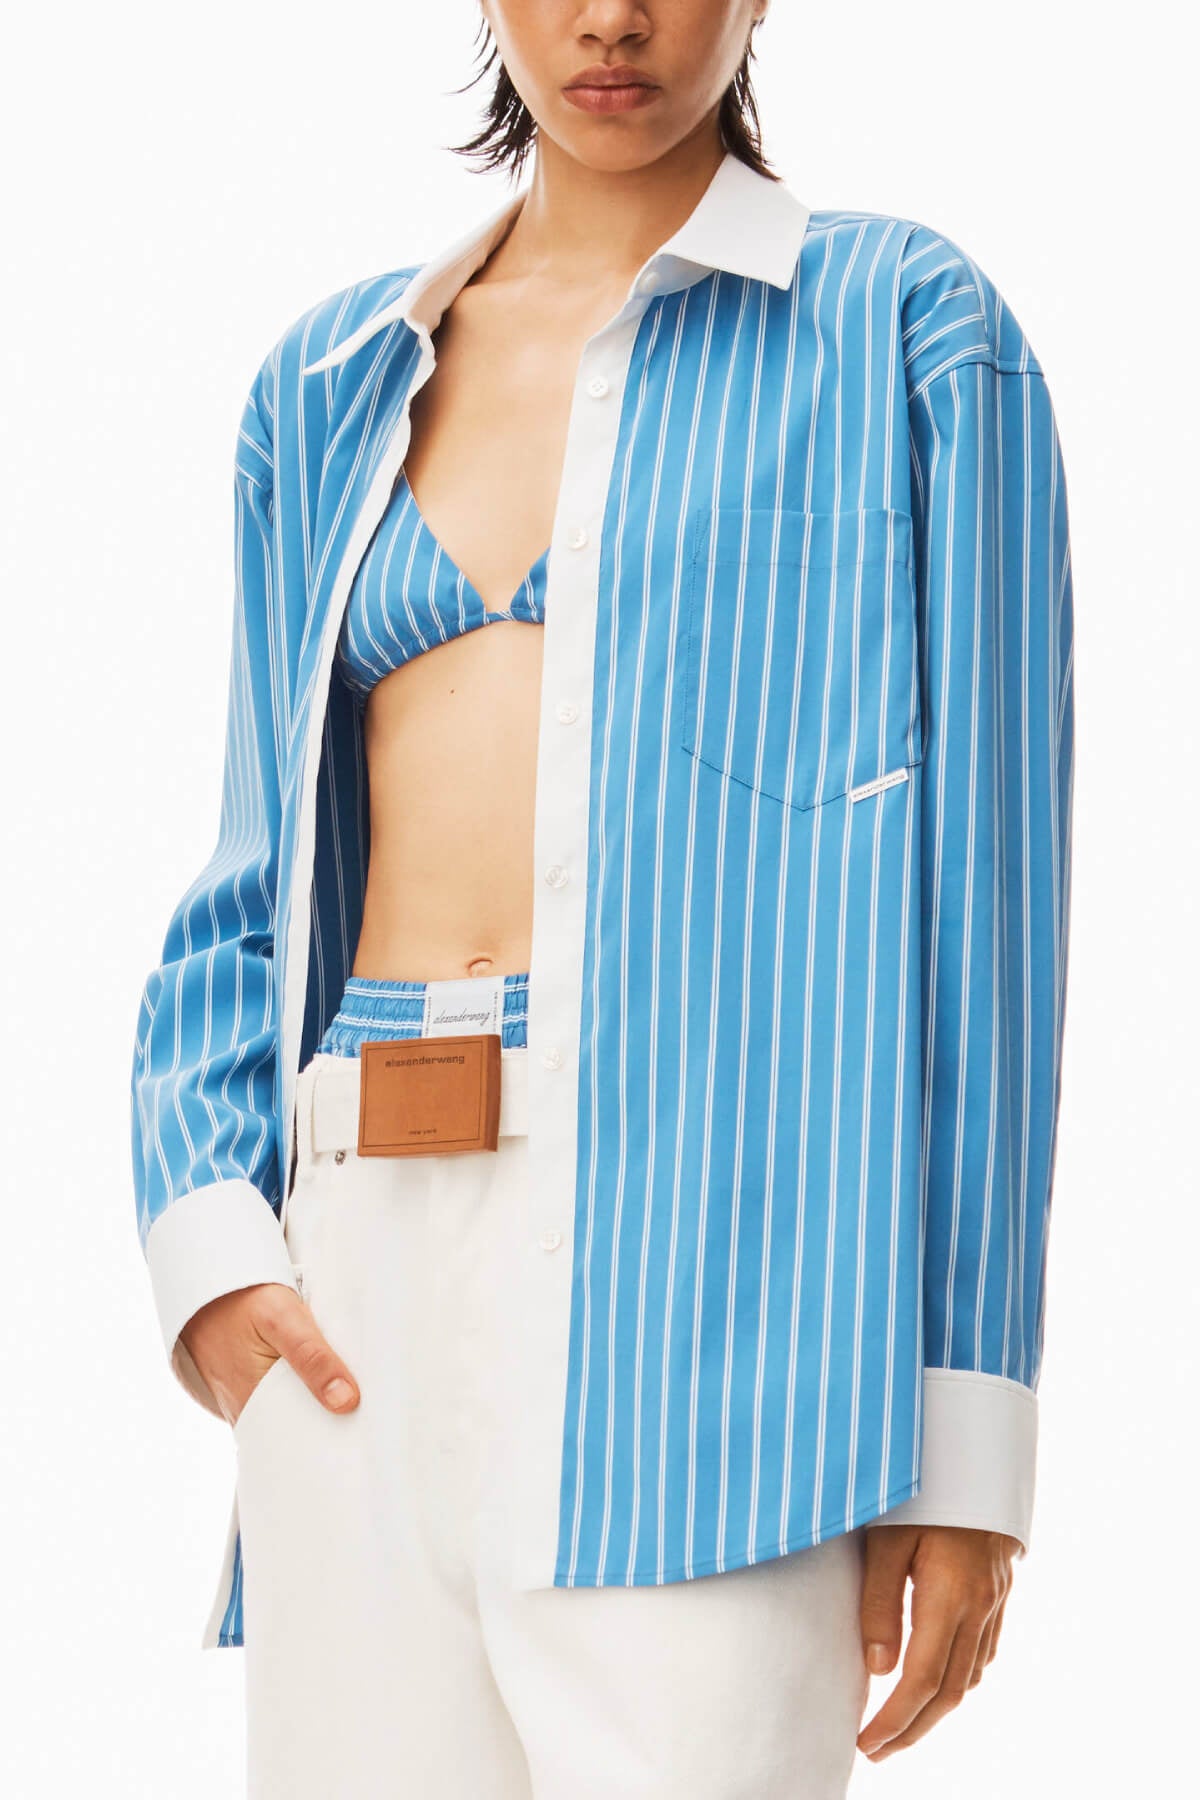 Alexander Wang Button Down Shirt - Blue/ White